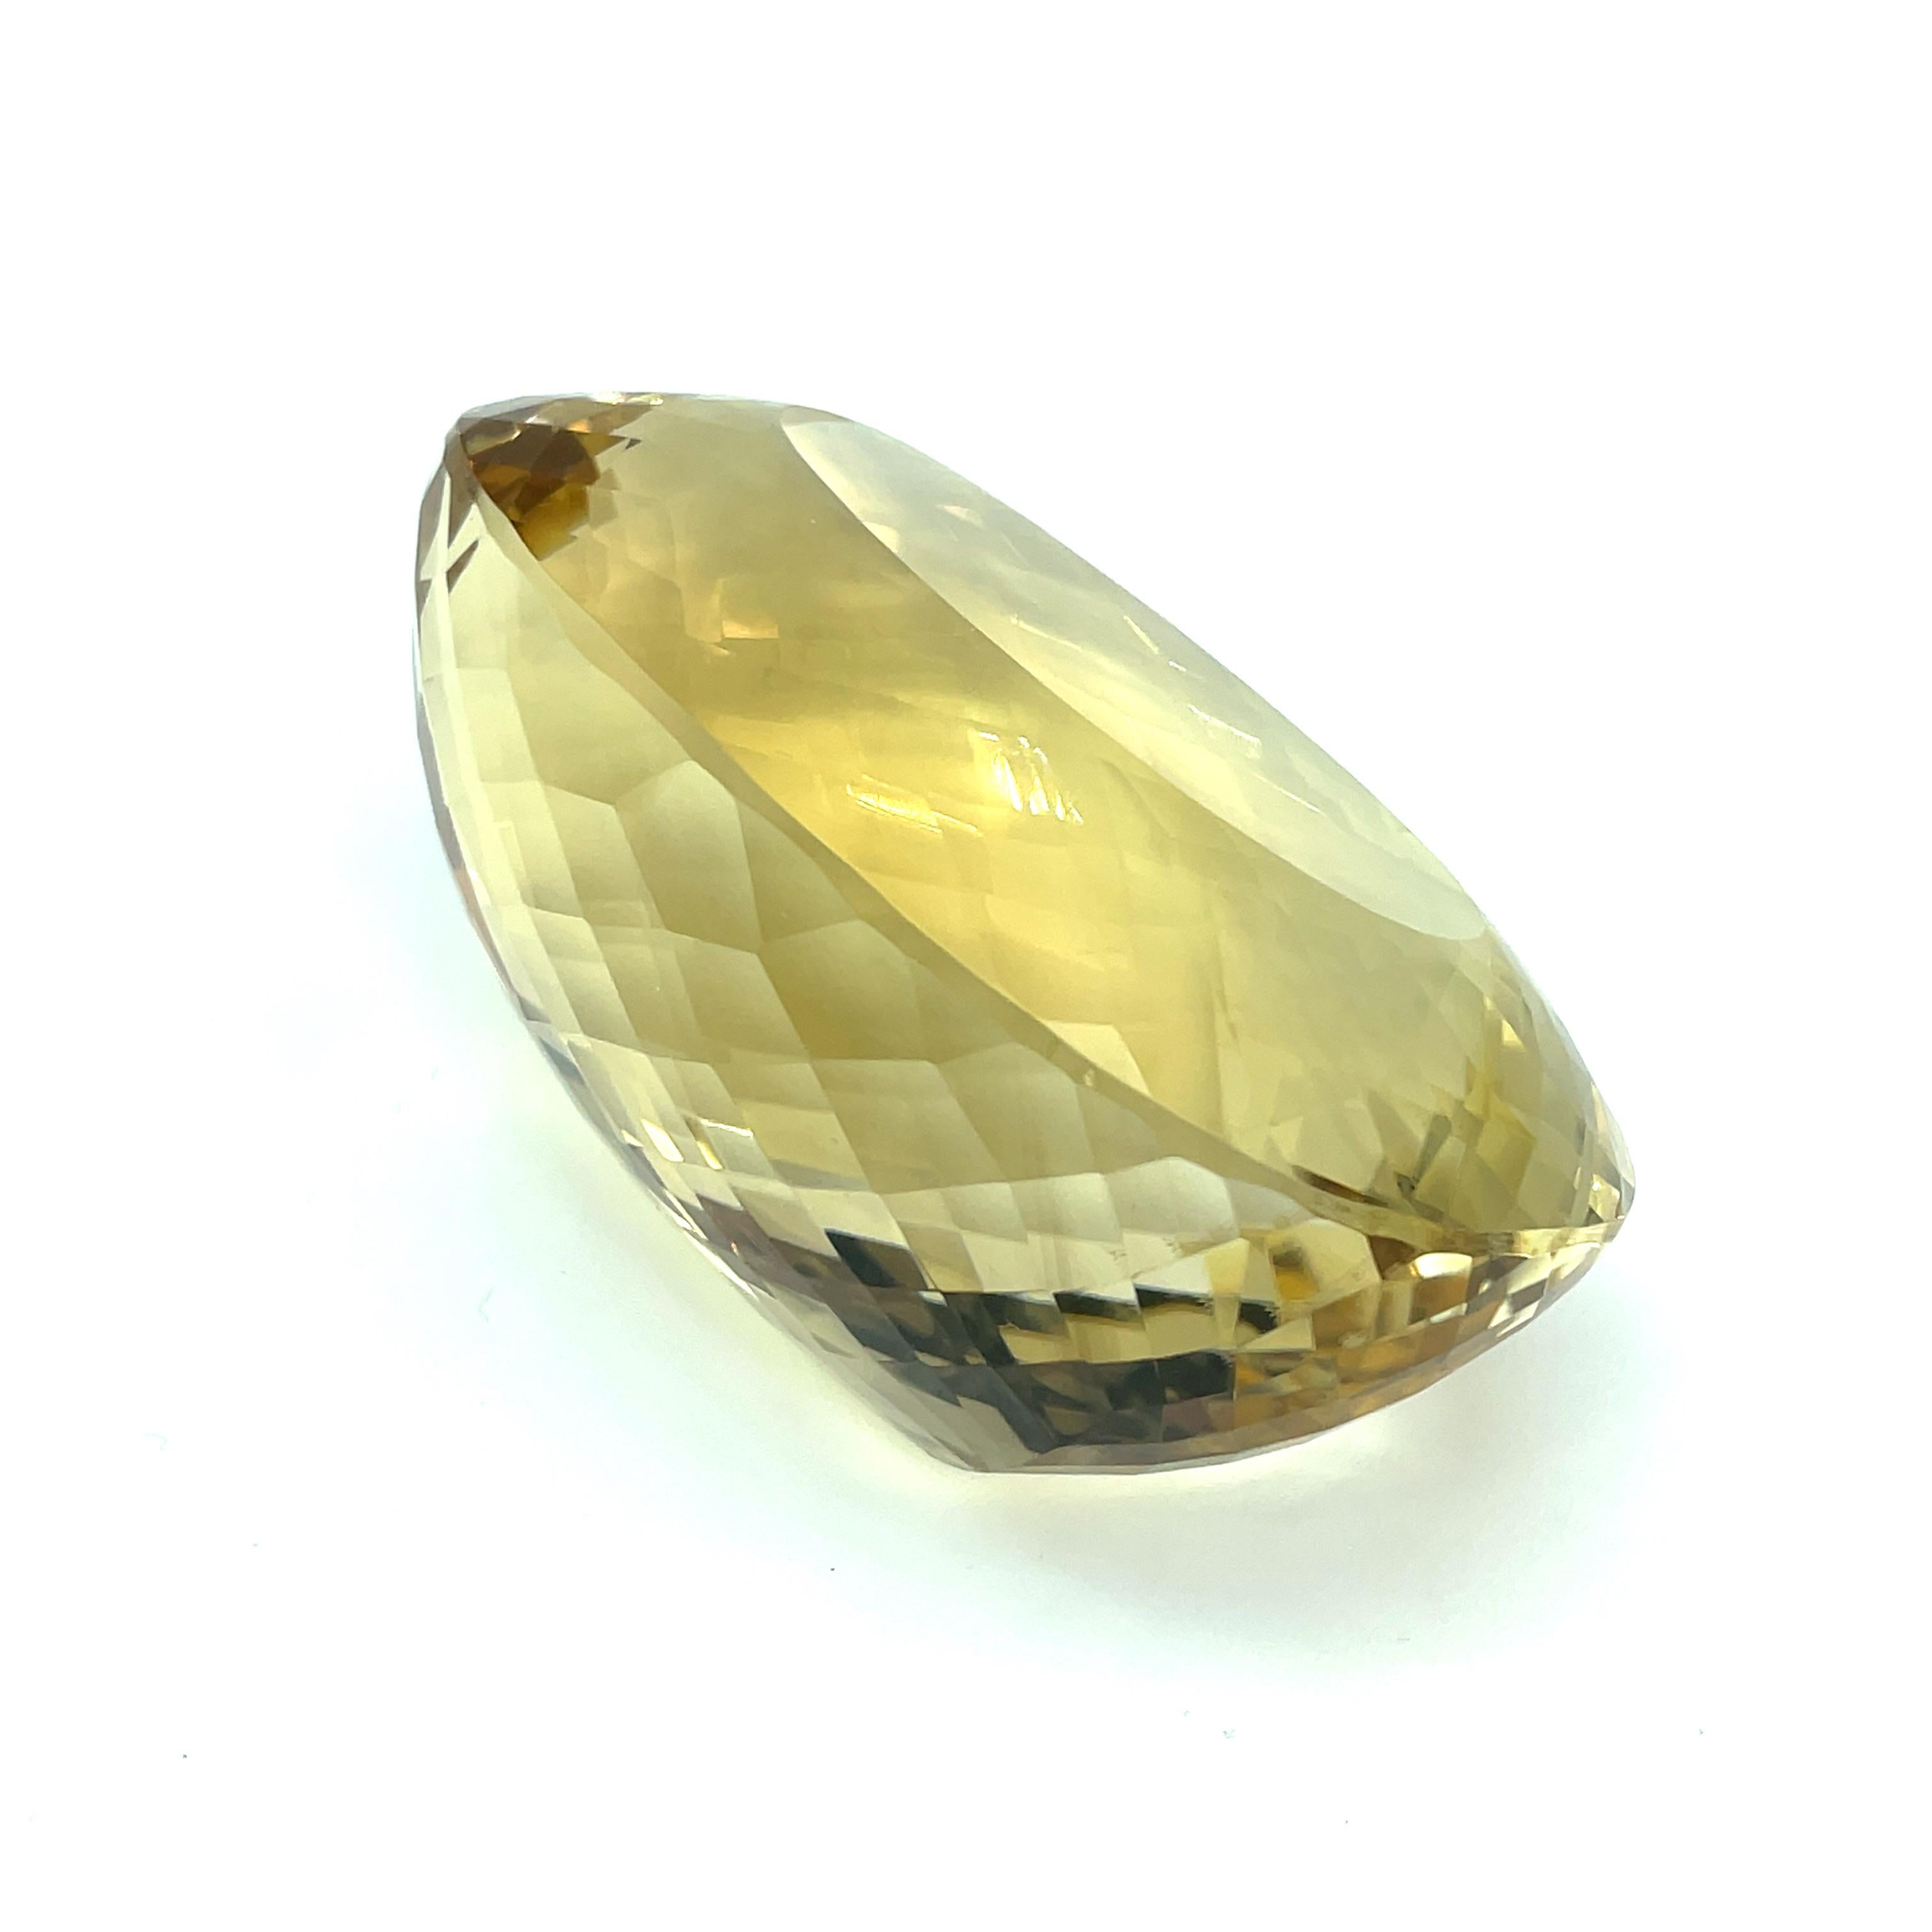 1058 Carat Oval Faceted Smoky Quartz Collector Gemstone (pierre précieuse de collection)   Unisexe en vente